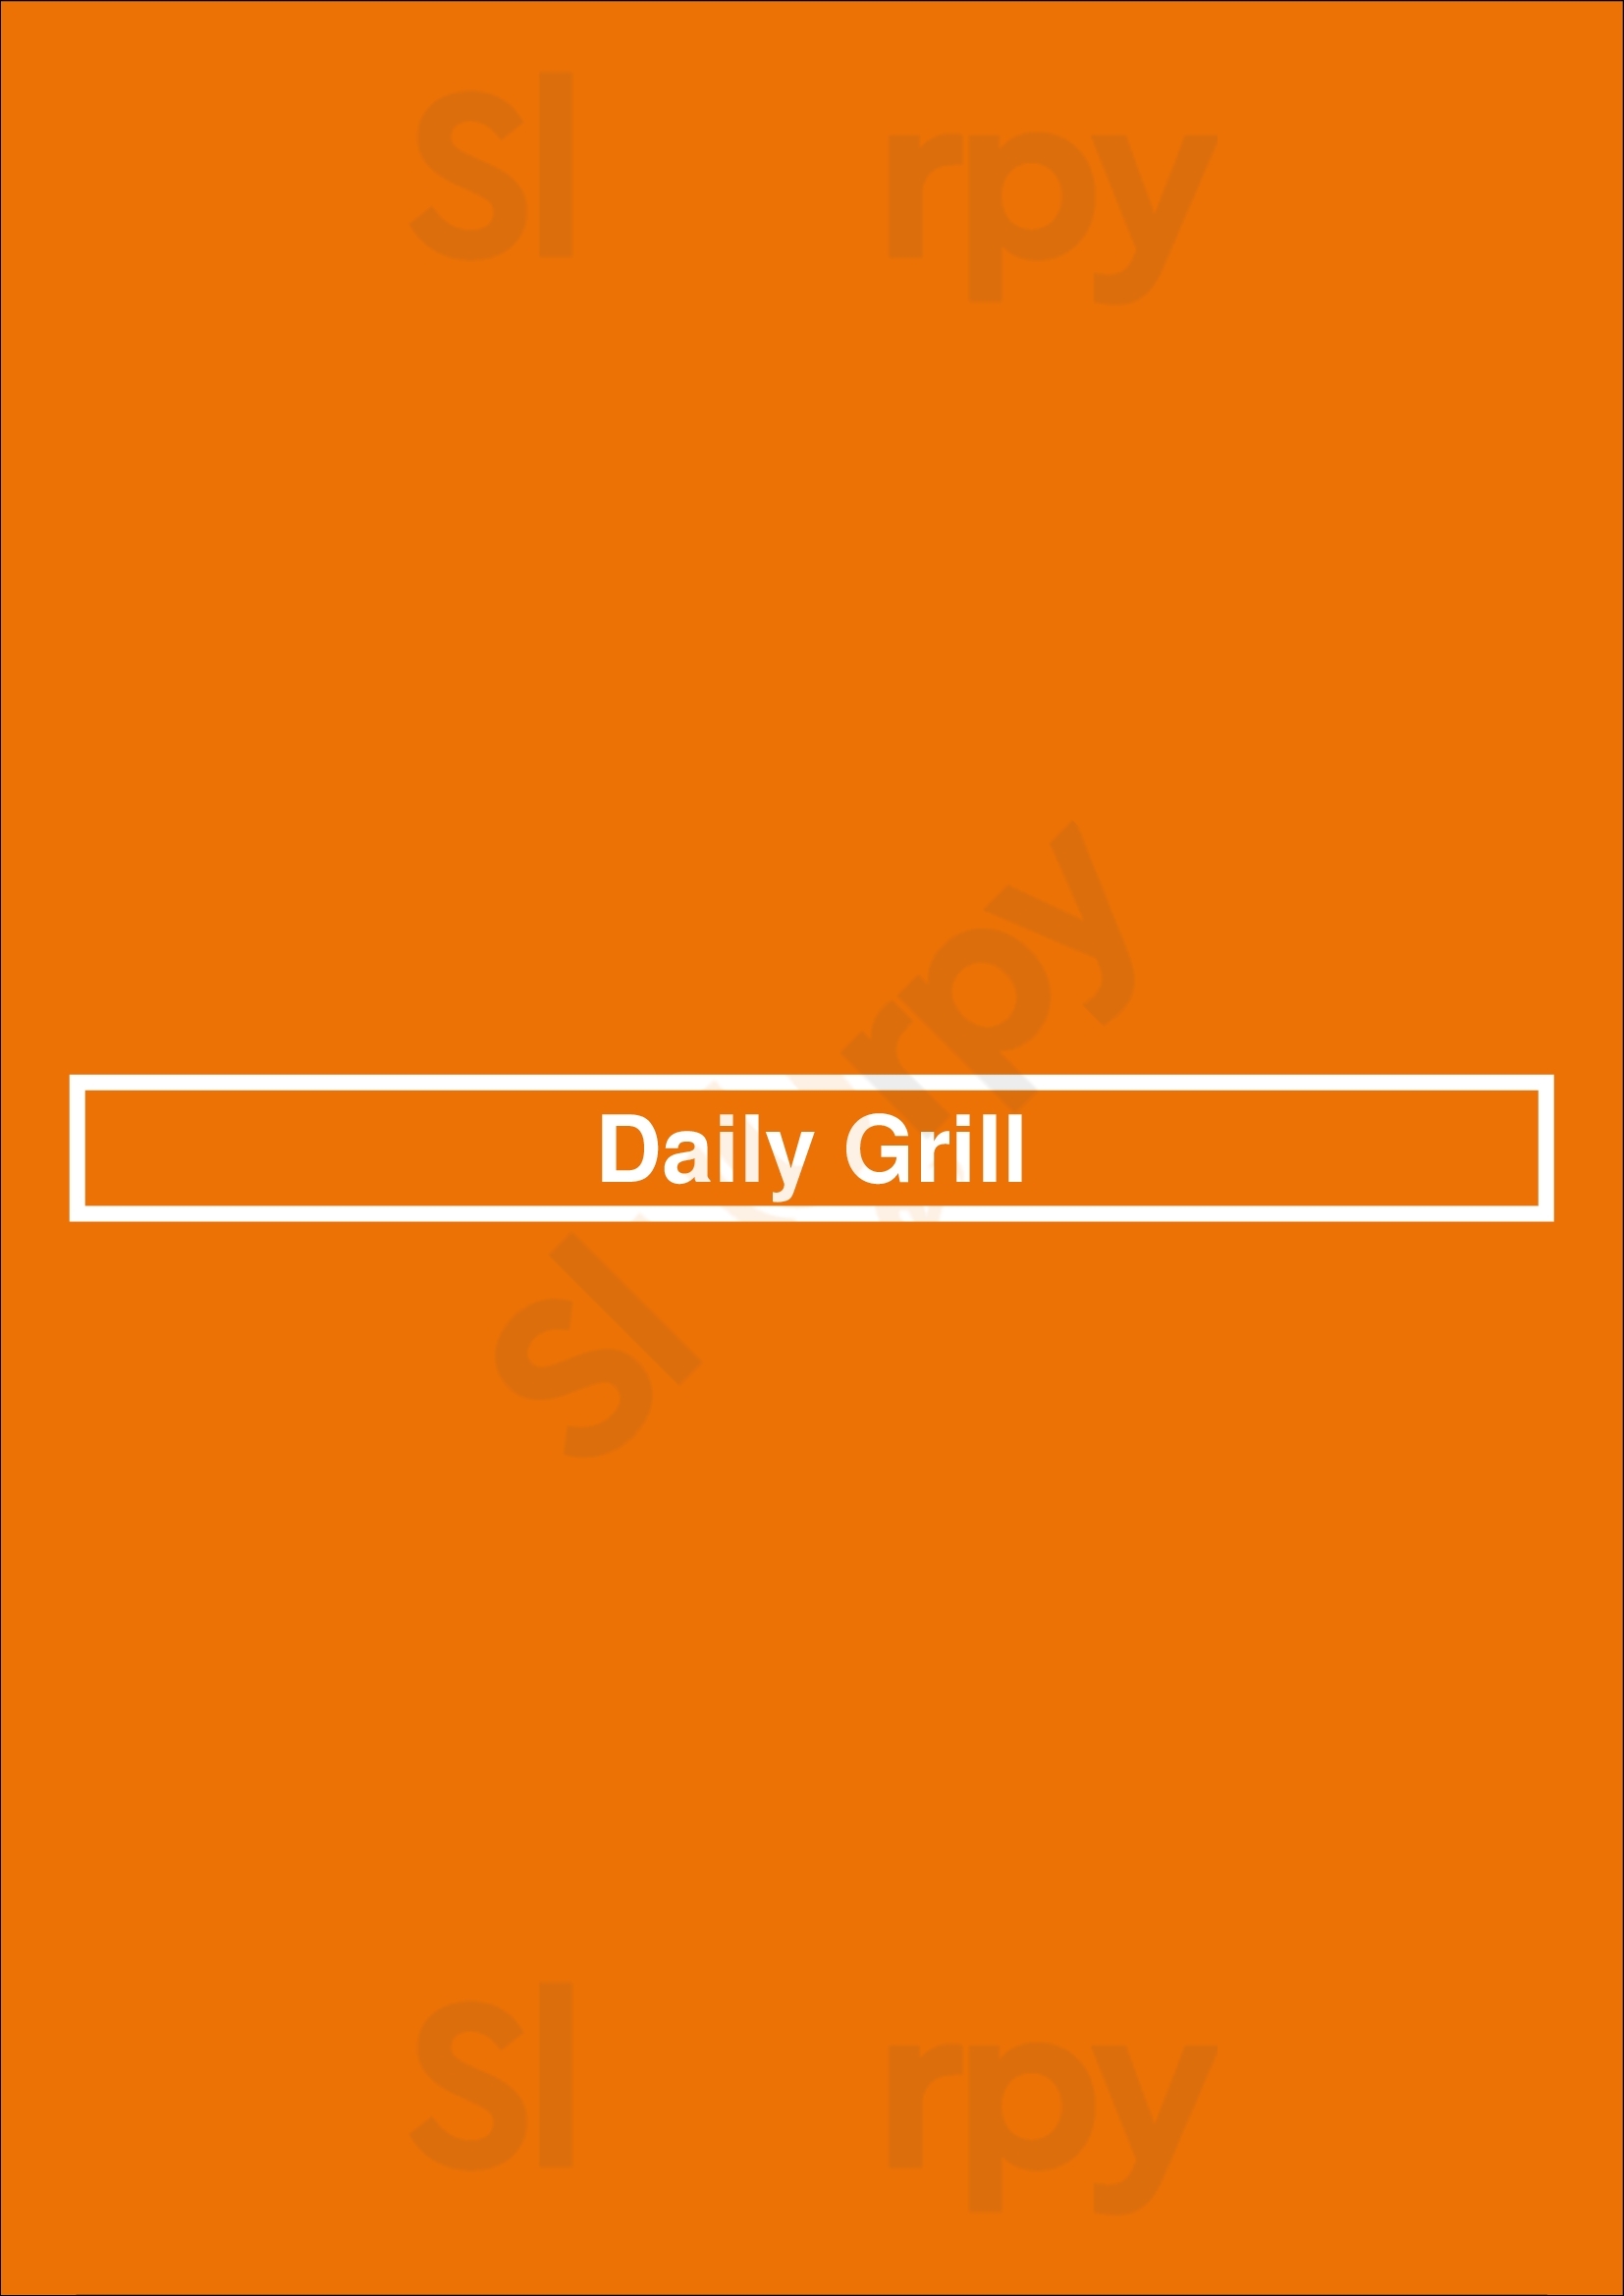 Daily Grill Los Angeles Menu - 1